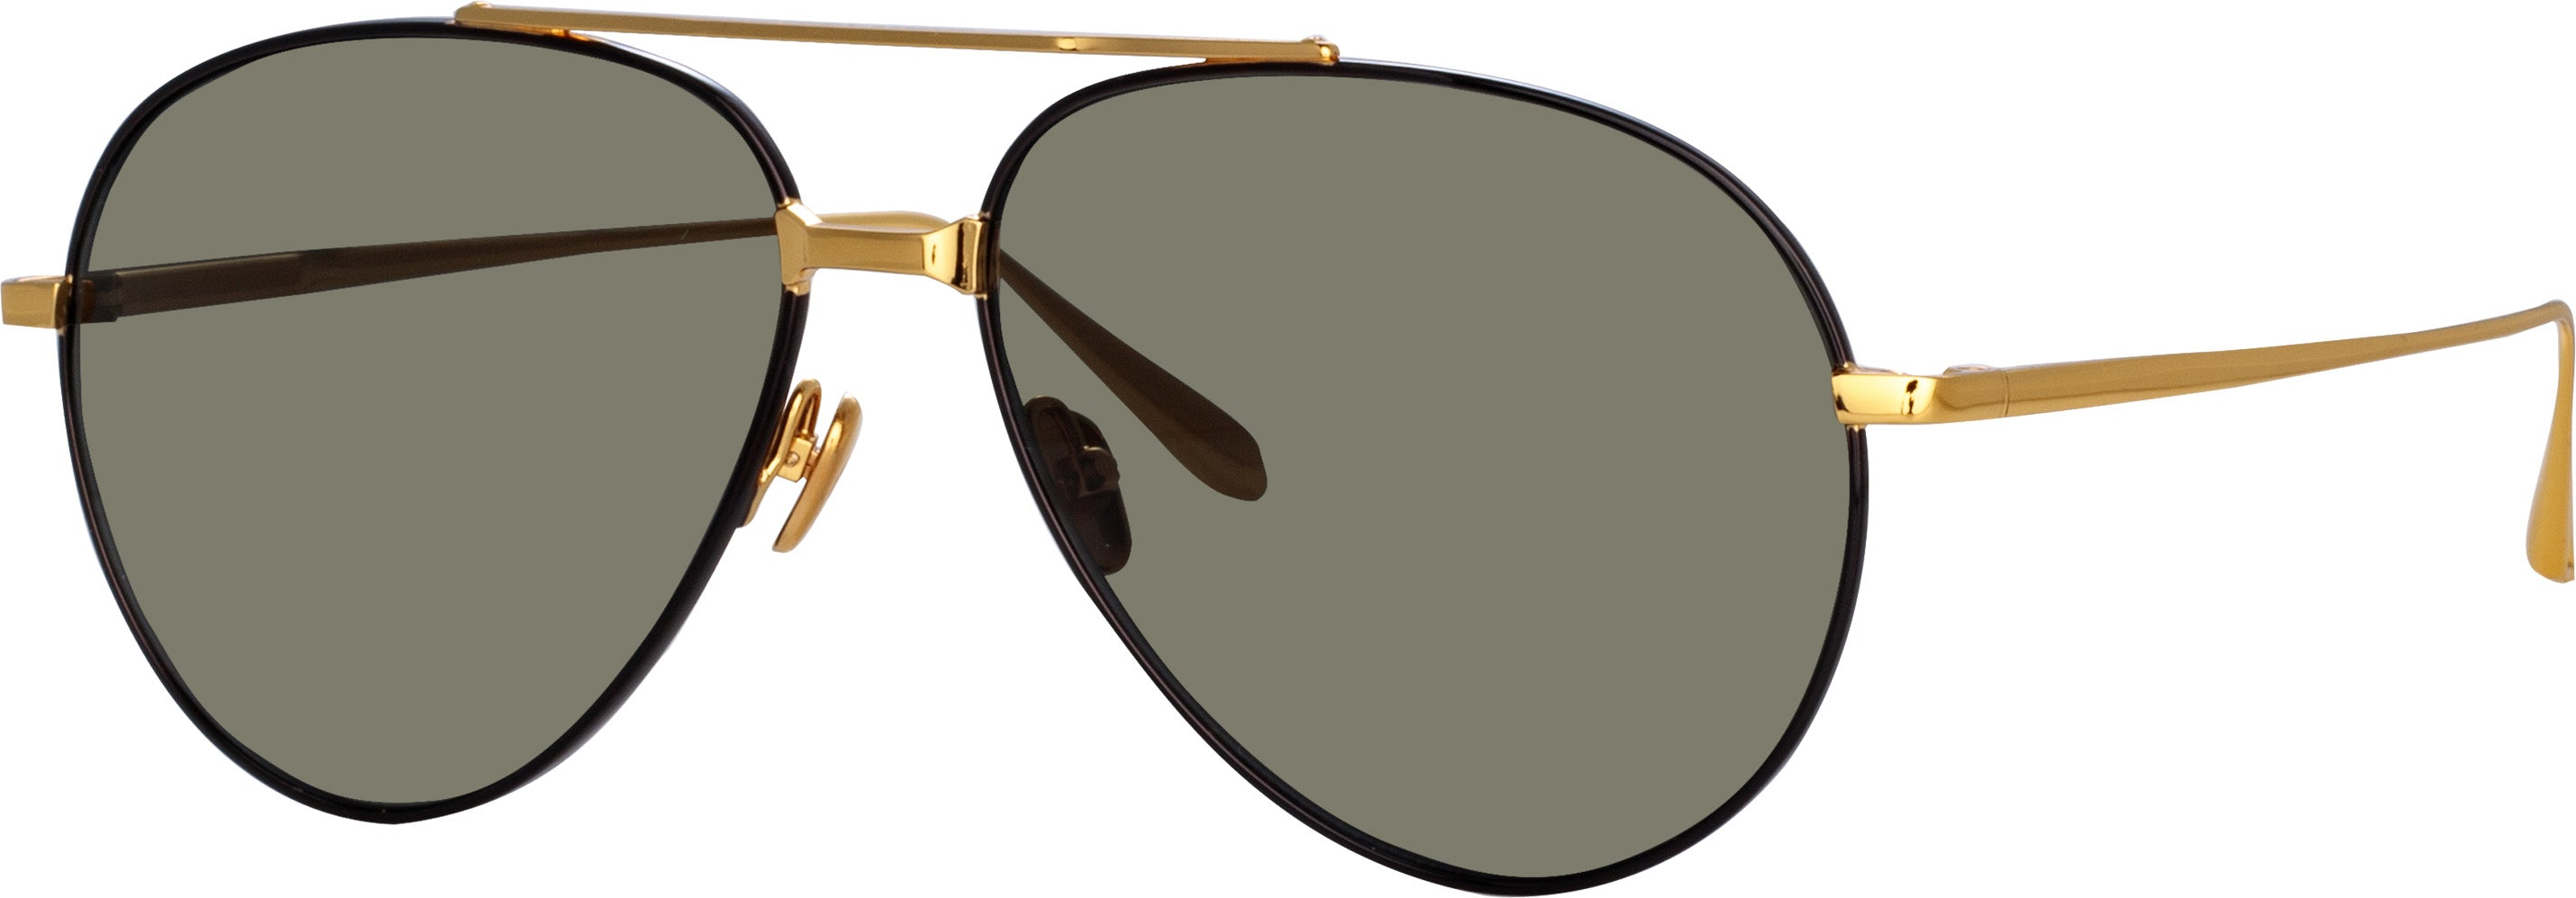 Color_LFL1421C1SUN - Marcelo Aviator Sunglasses in Black and Yellow Gold